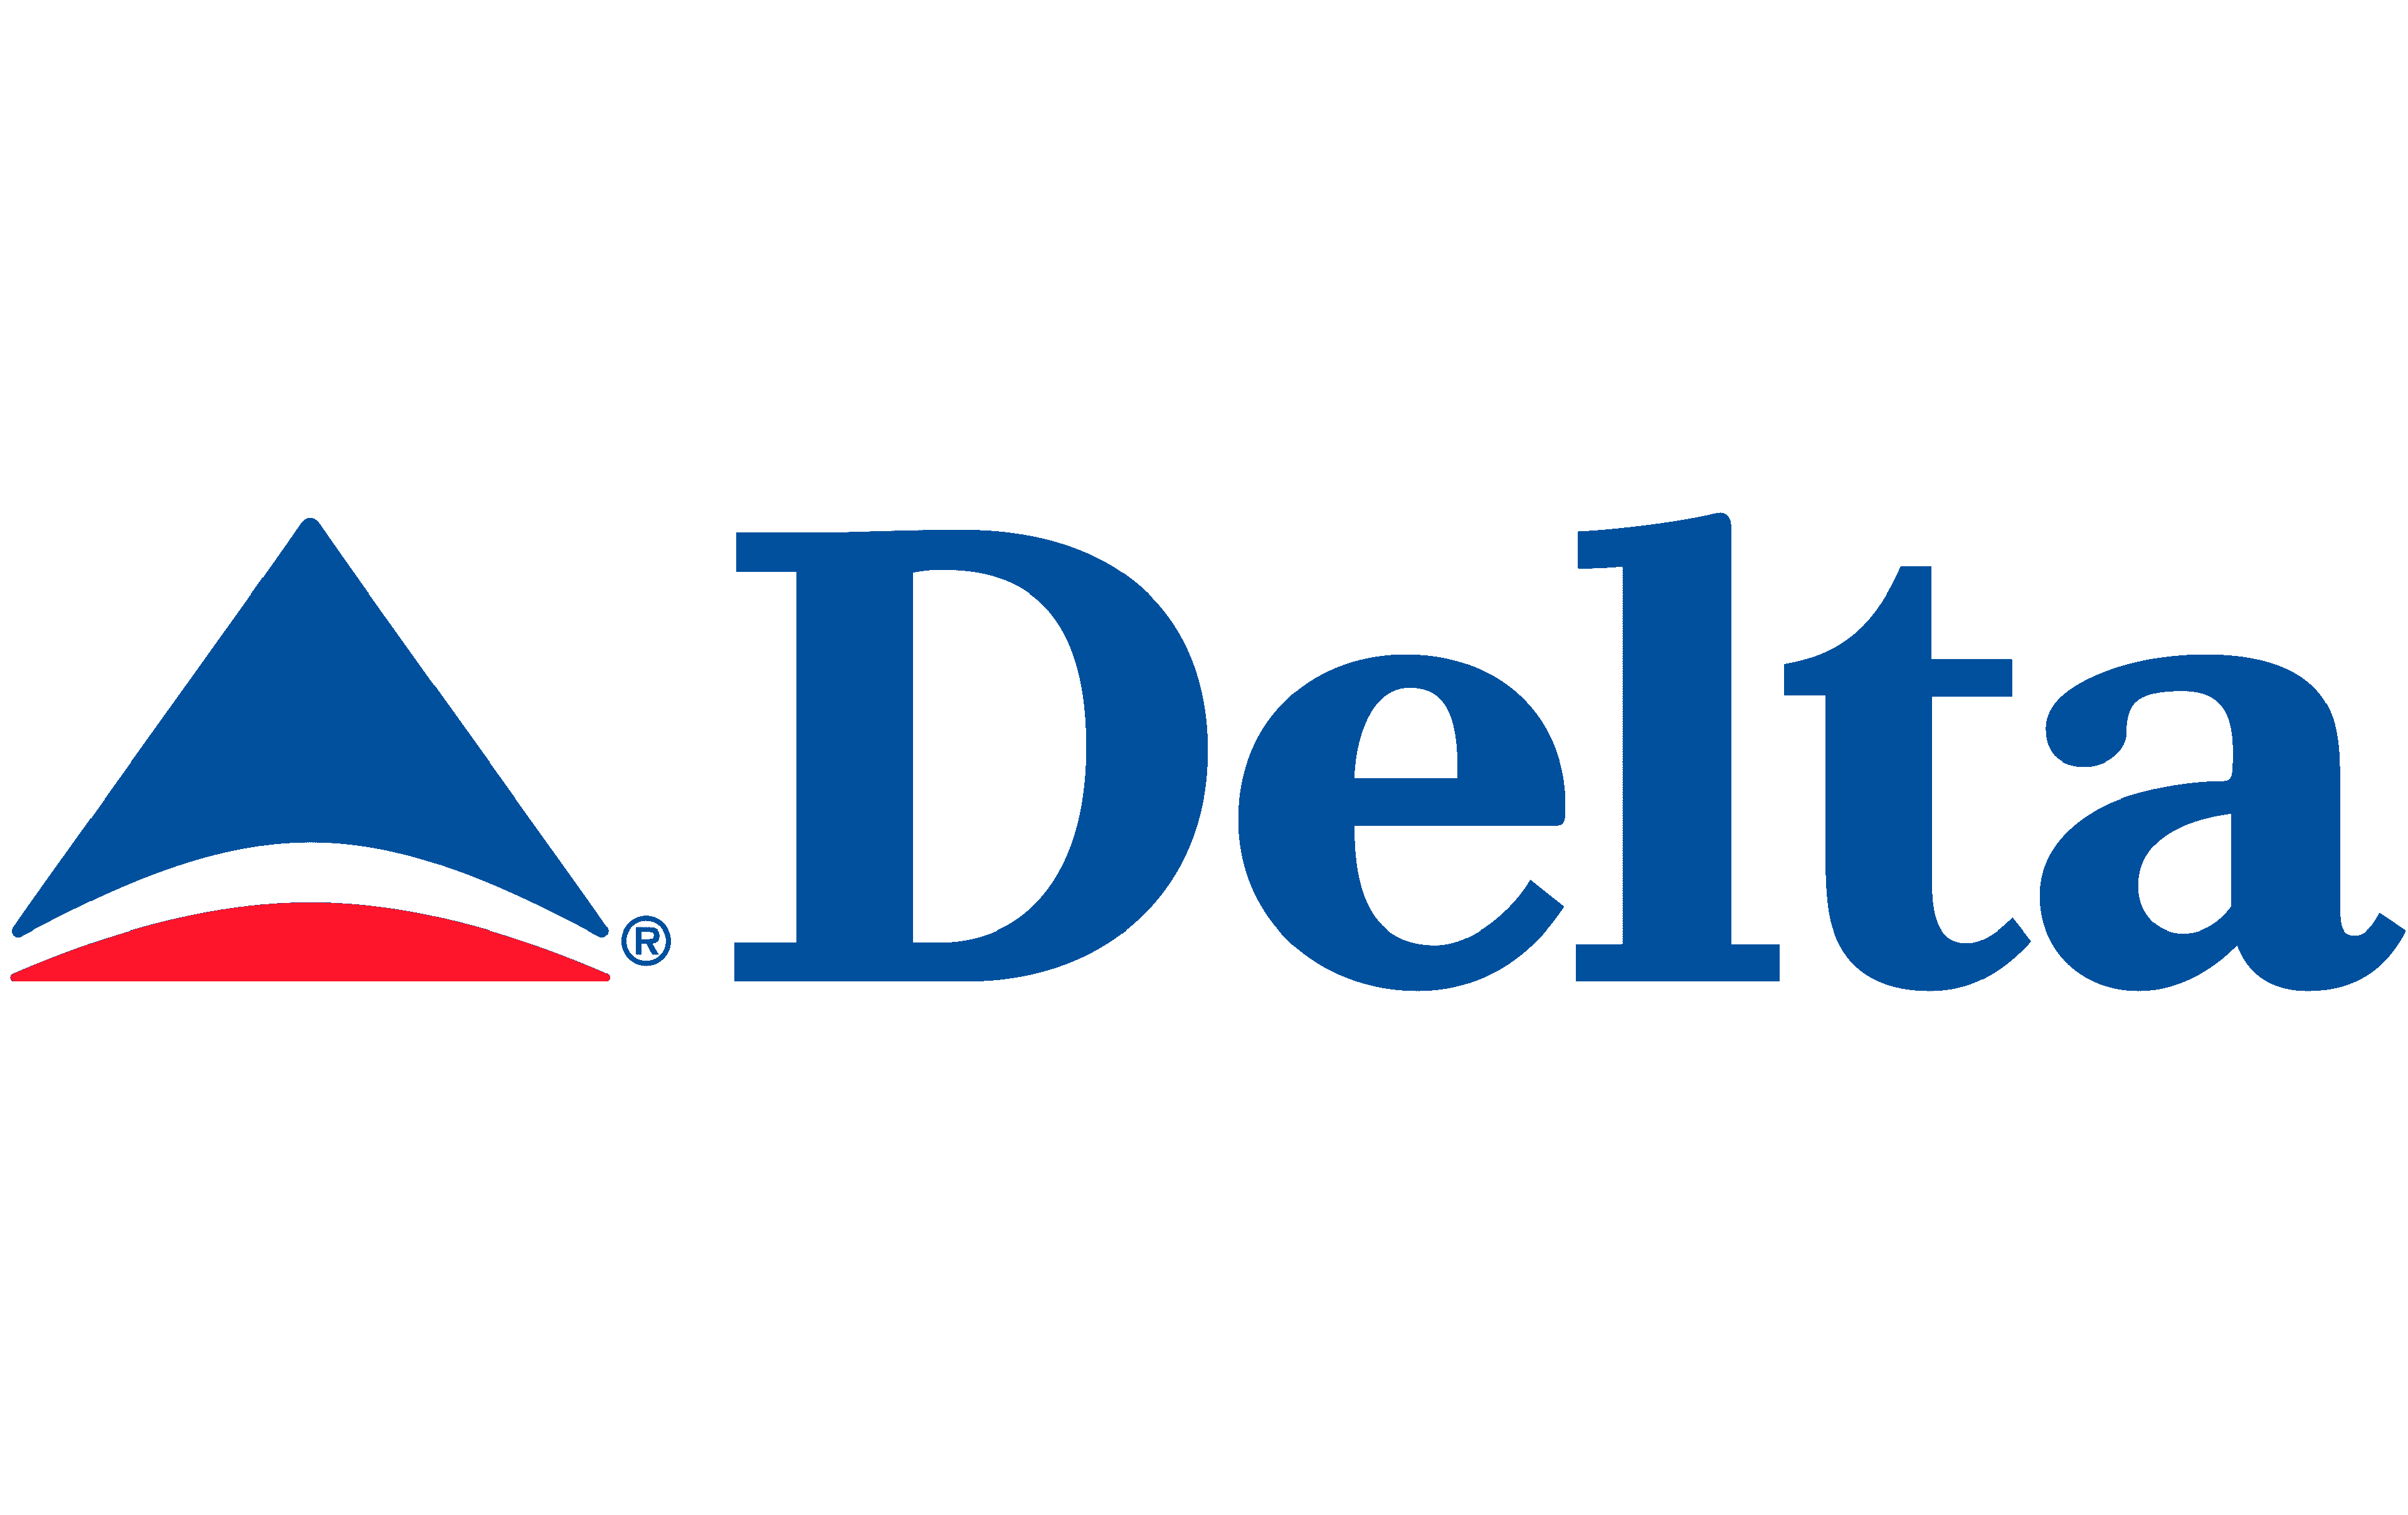 Delta Airlines Logo Transparent